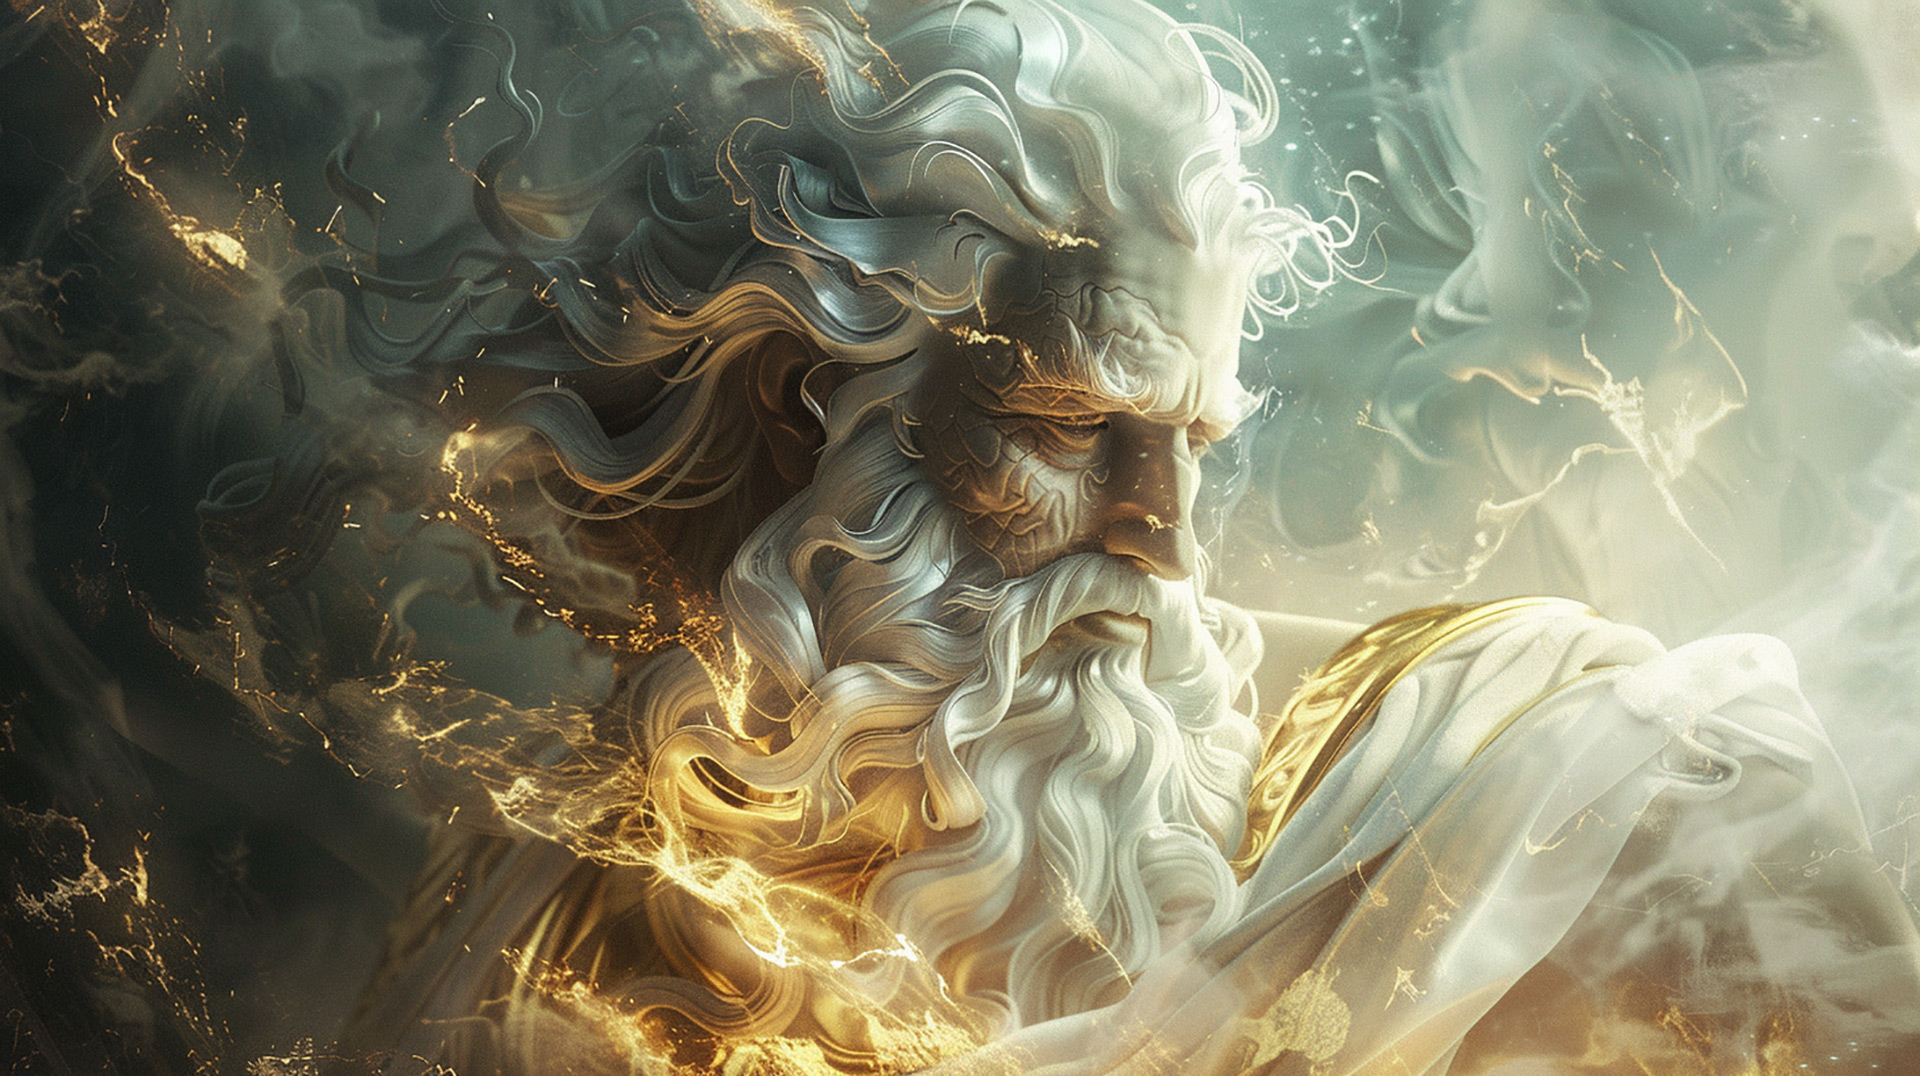 Hades's Kingdom: HD Wallpaper Illuminating the God of the Underworld